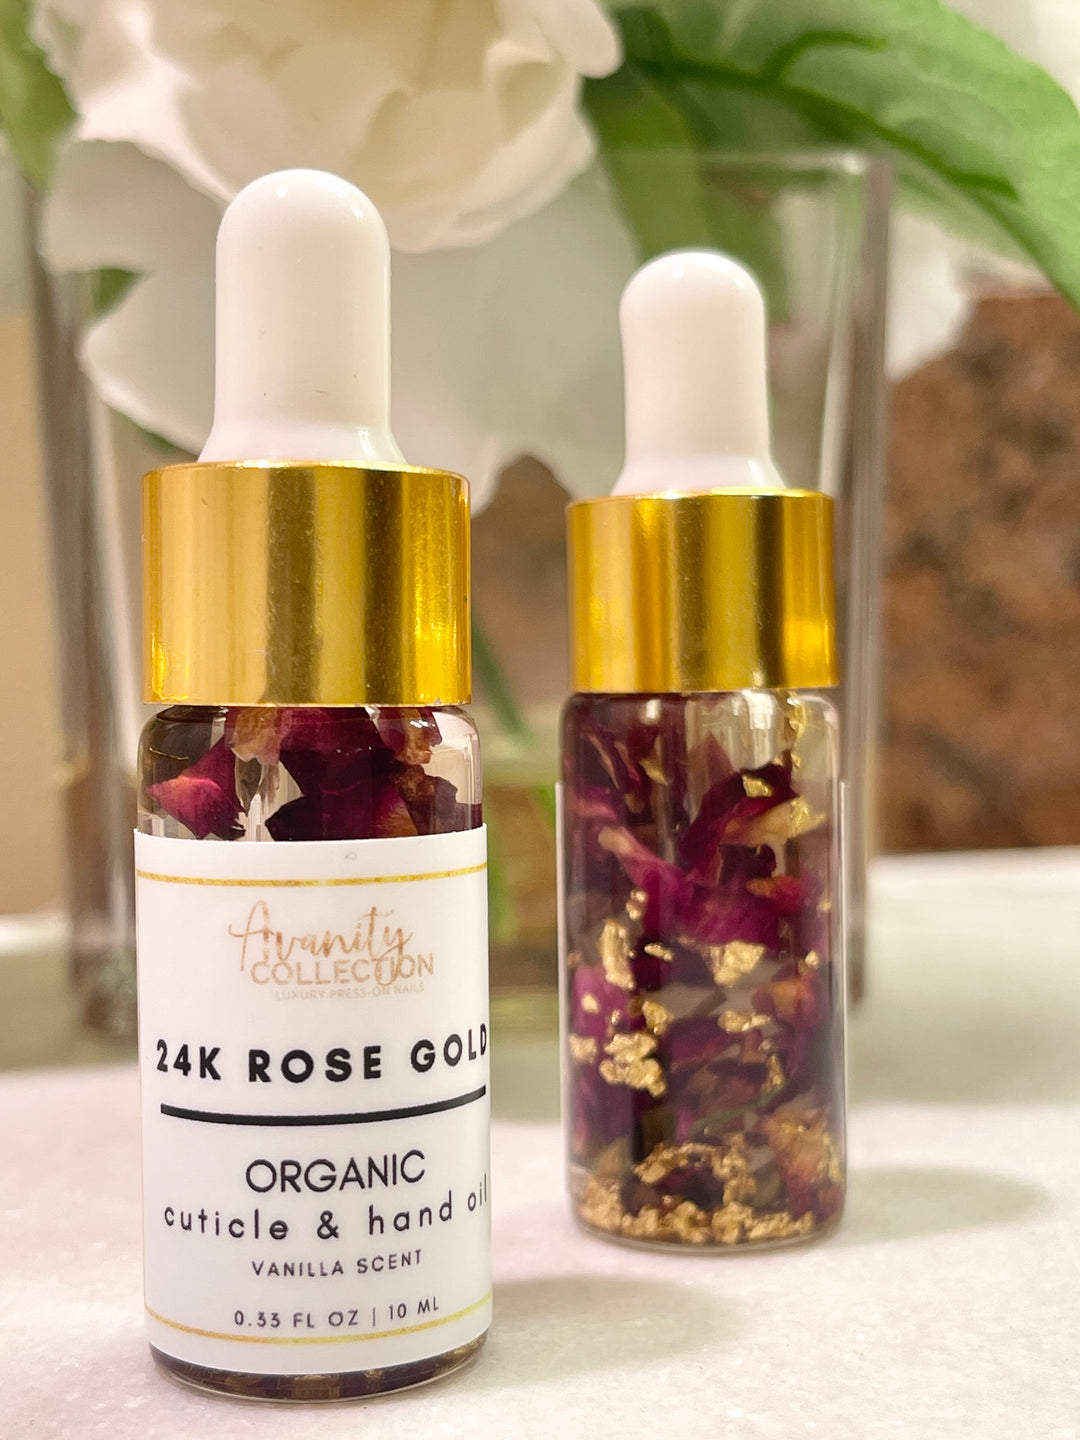 Luxury 24K Rose Gold Organic Cuticle & Hand Oil